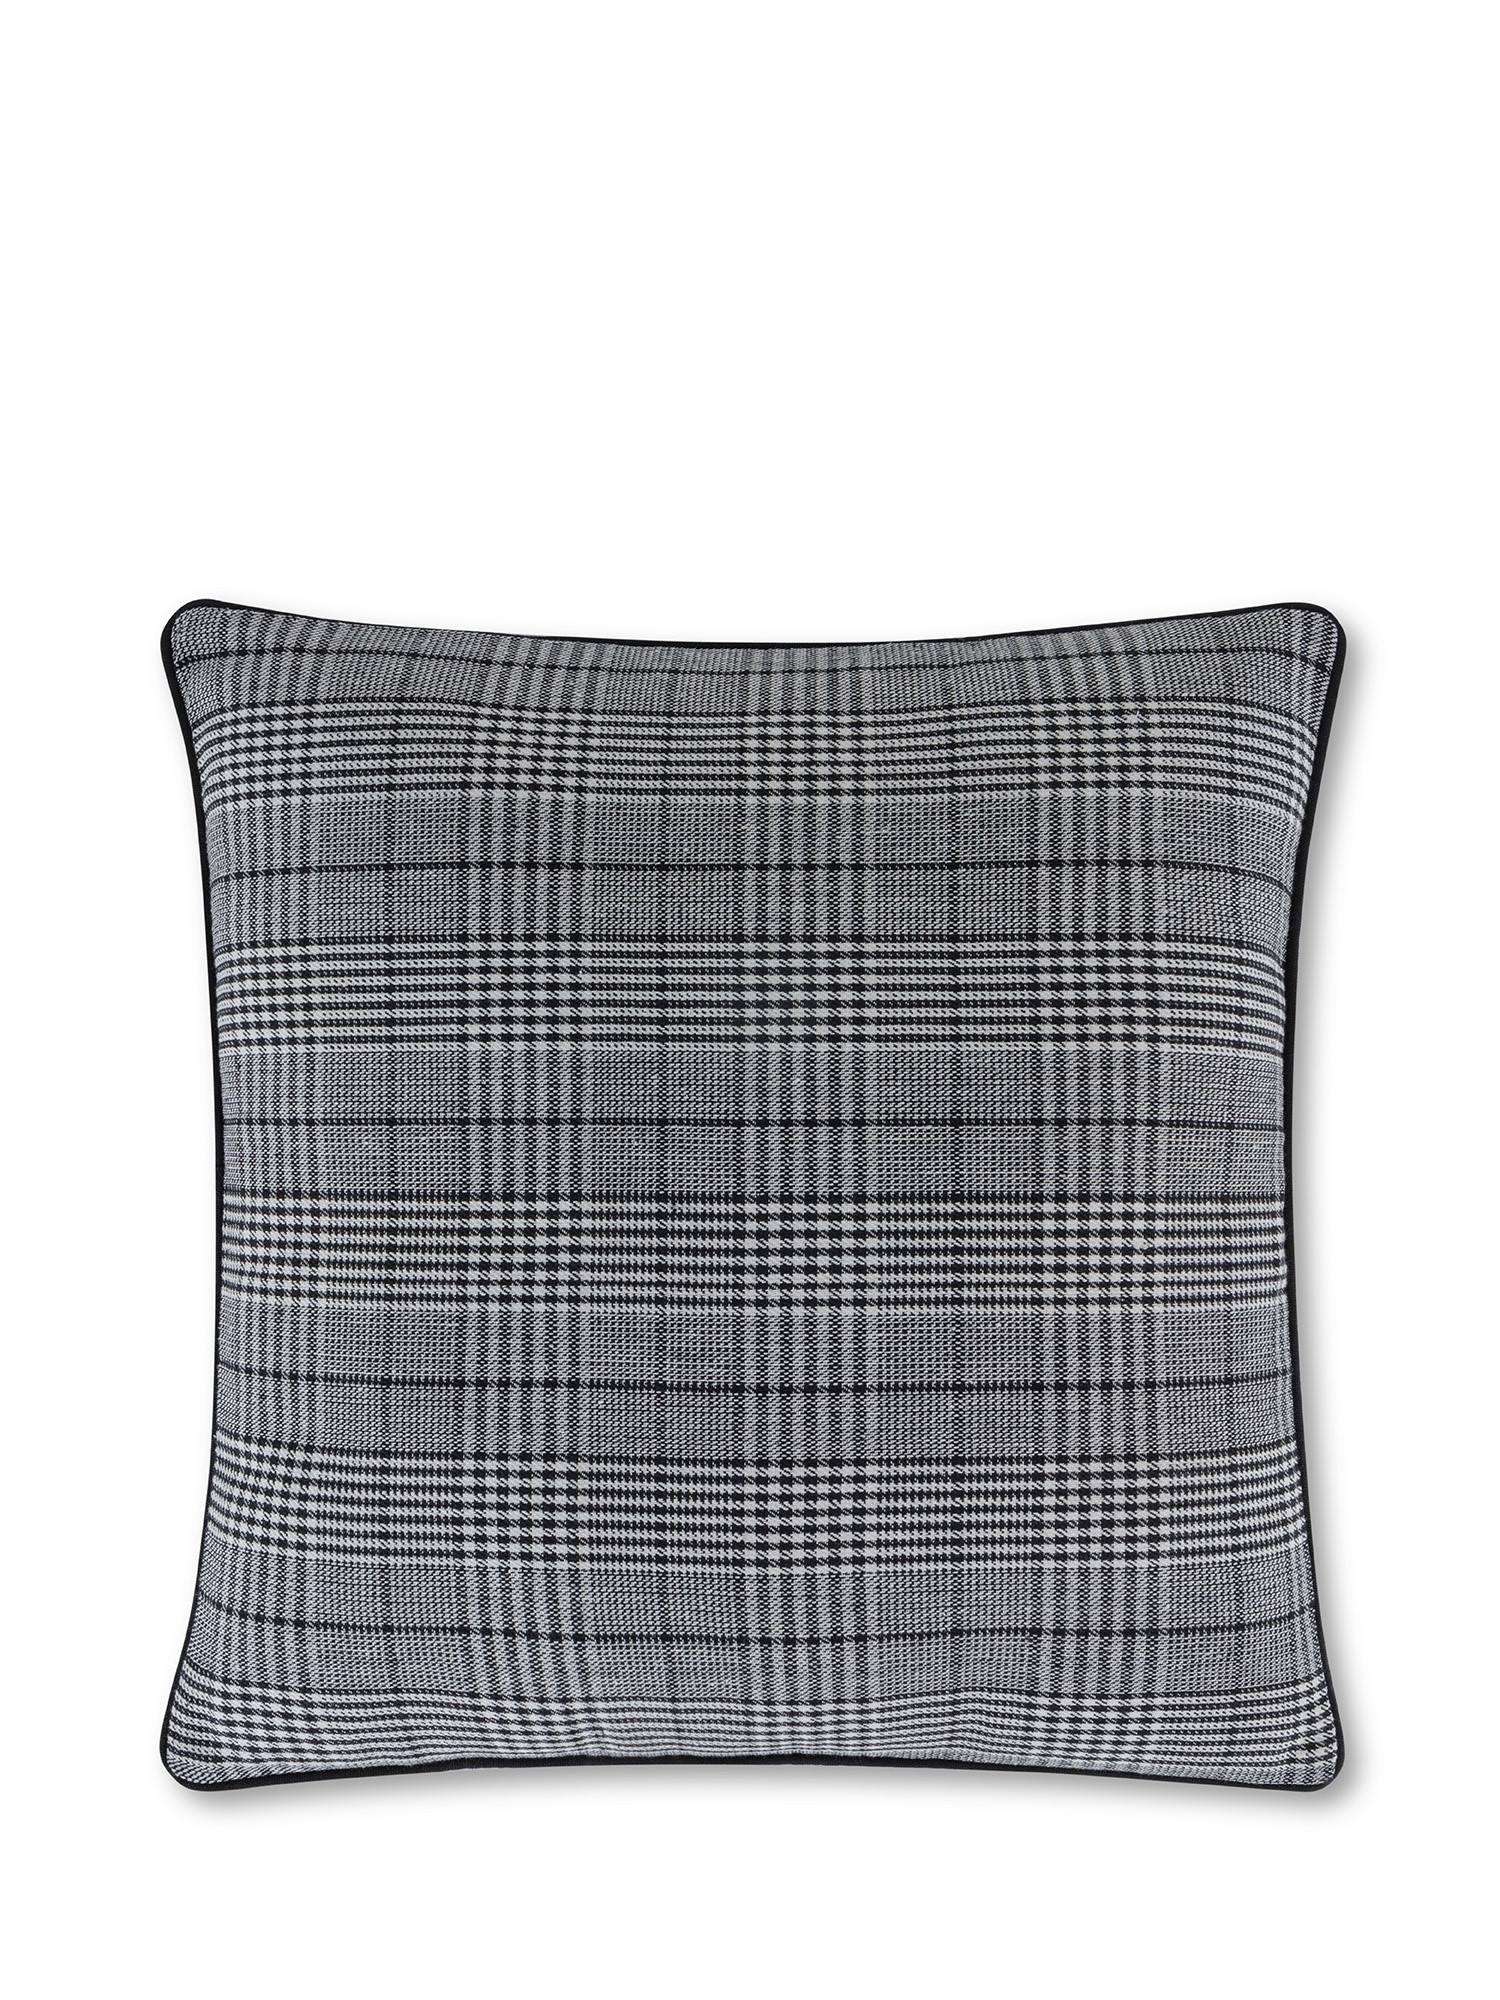 Cotton cushion 45x45cm, Black, large image number 0